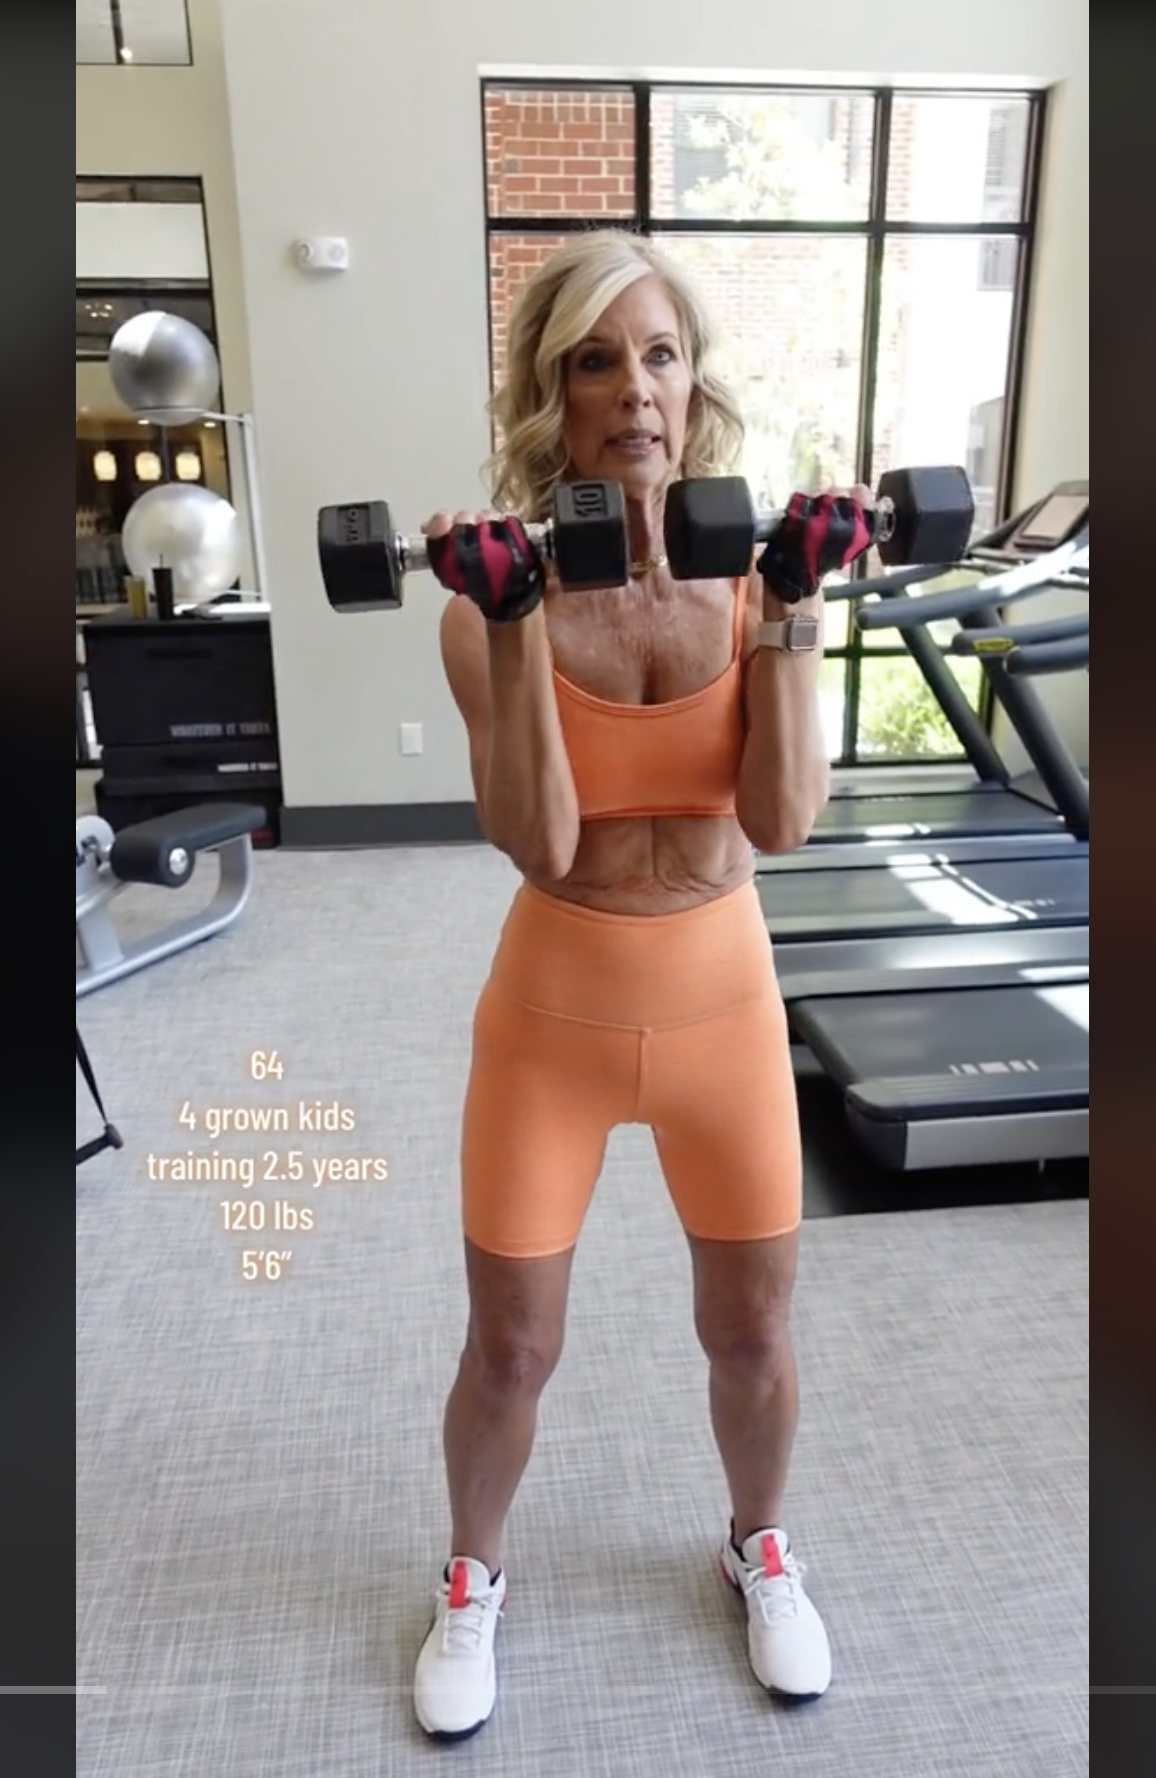 Harrah Brown lifting dumbbells in a video dated April 24, 2023 | Source: tiktok.com/@harrahbrown